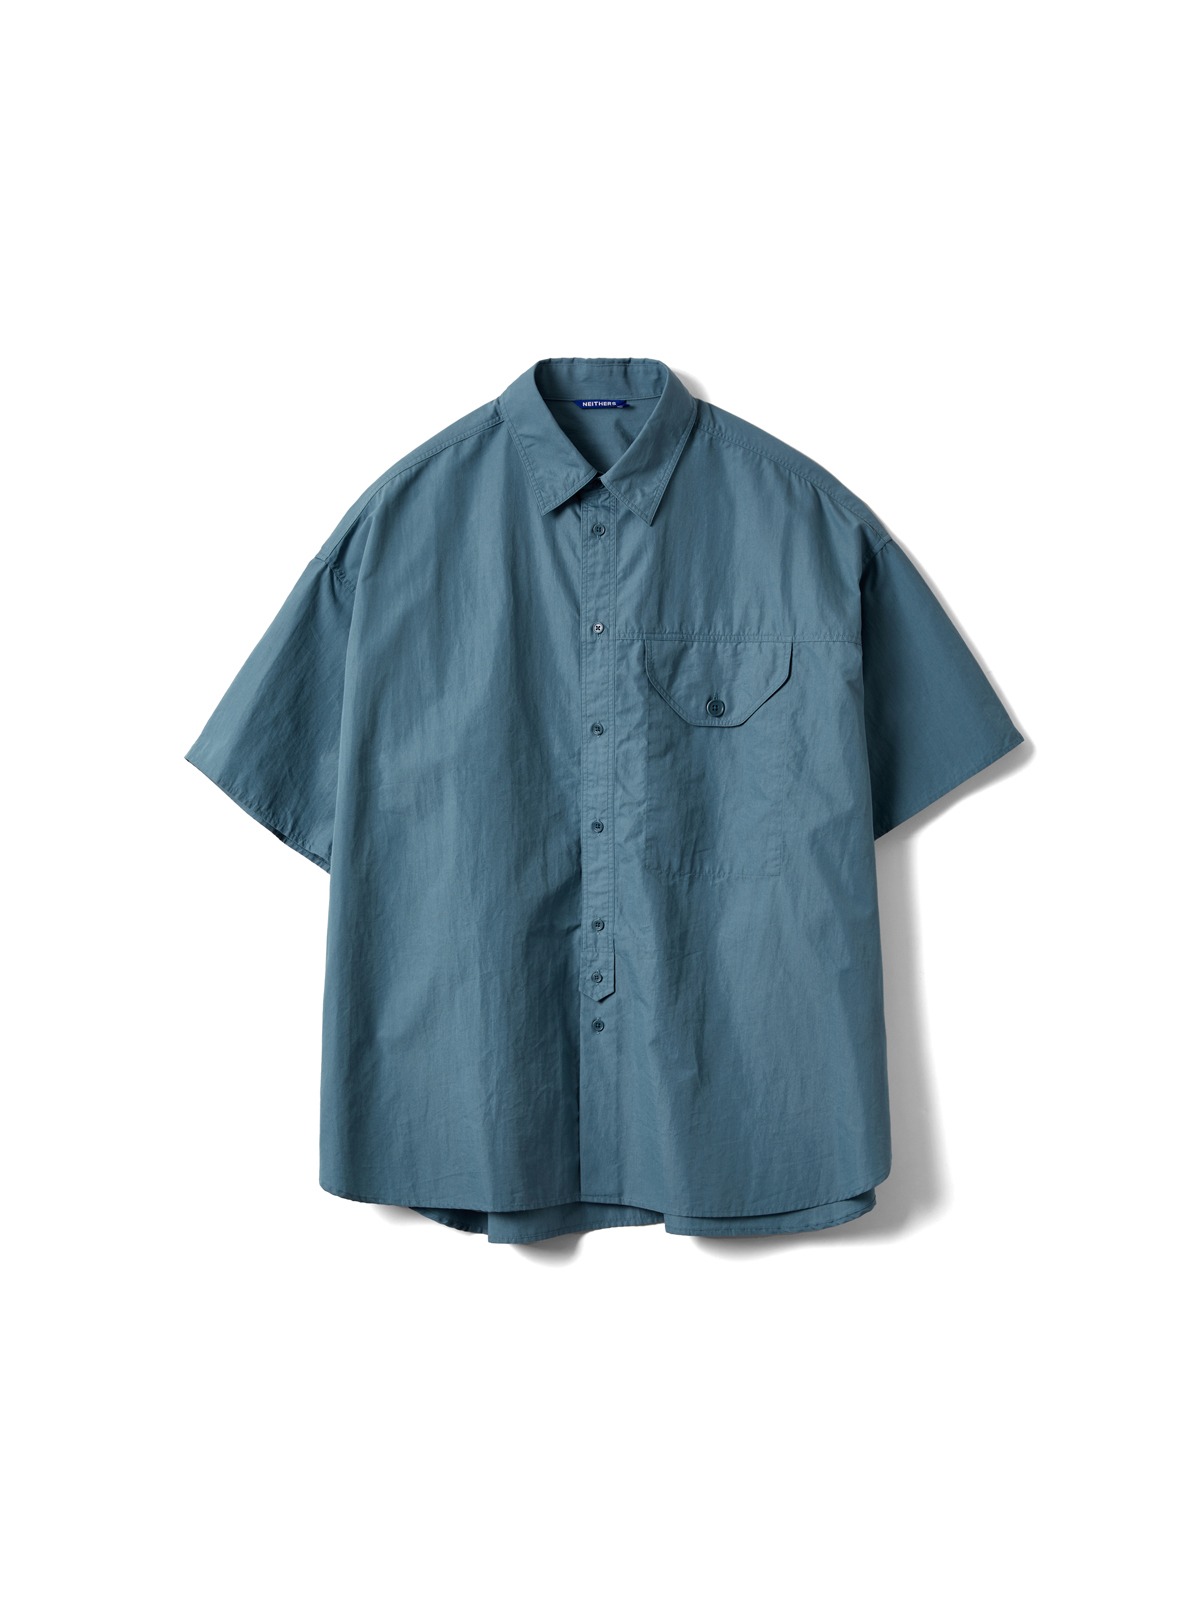 Engineer S/S Shirt (Faded Blue)